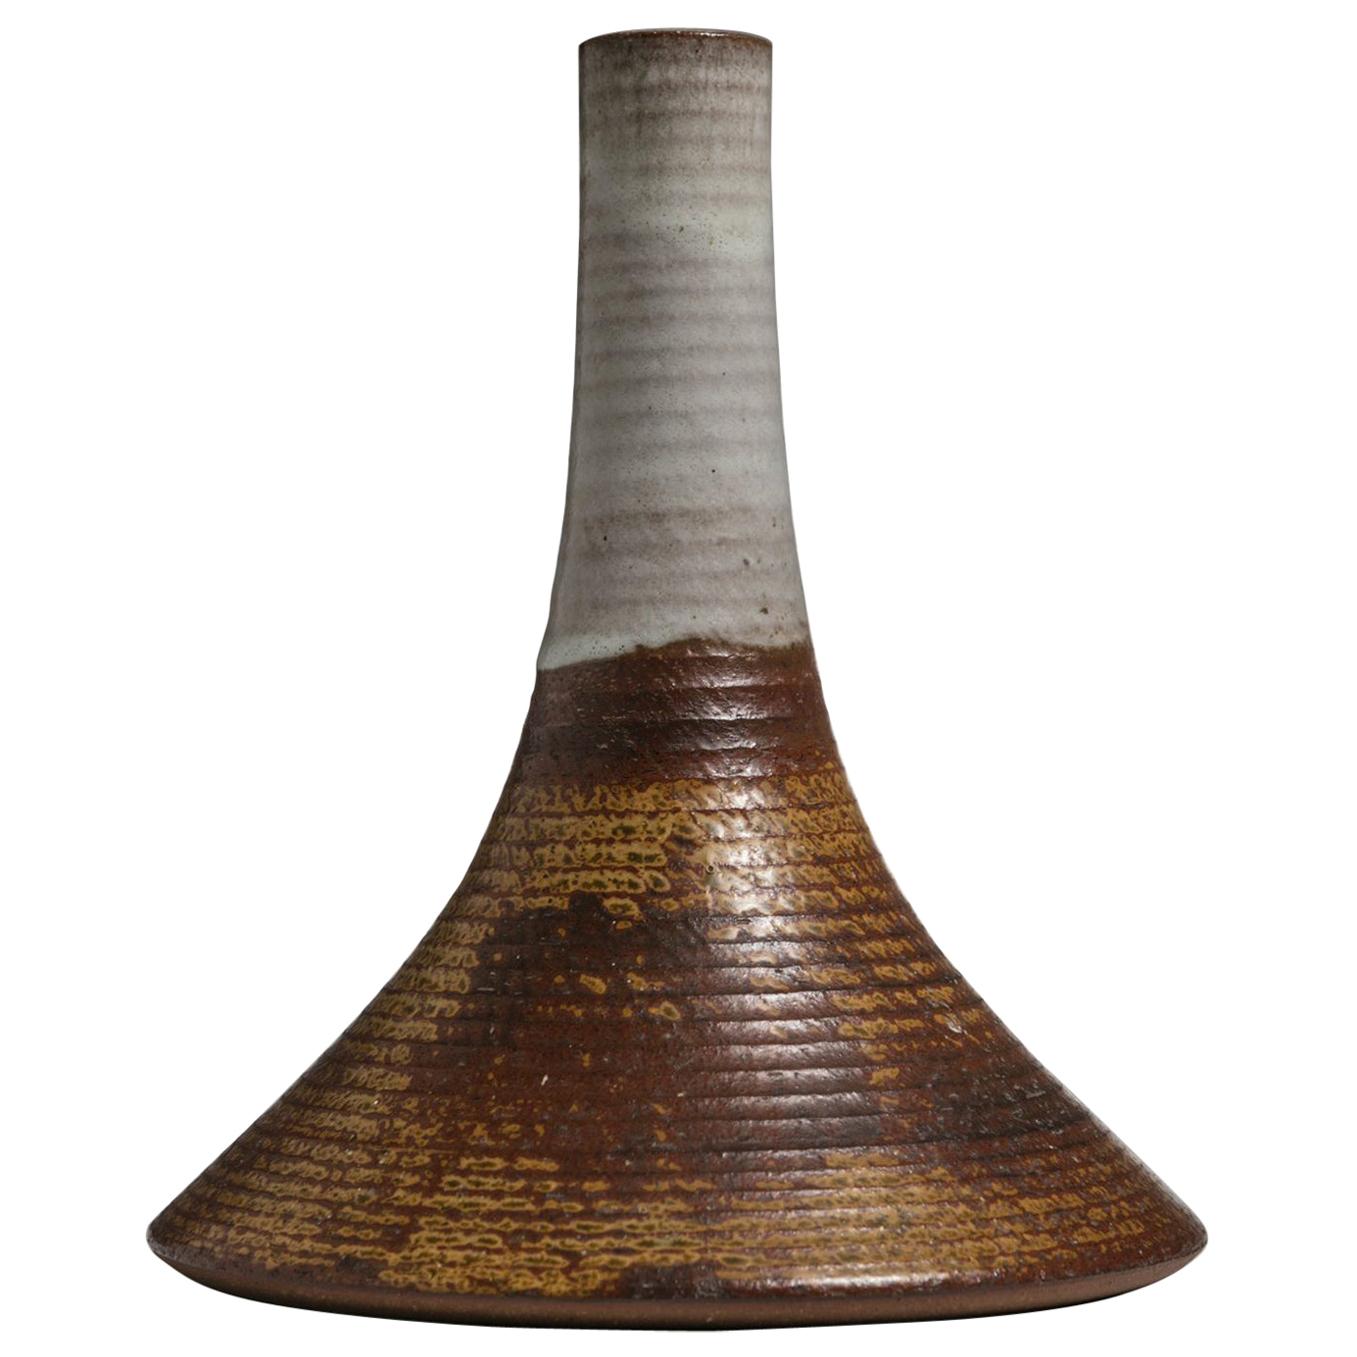 Ceramic Vase by Nanni Valentini for Ceramica Arcore, Italy, 1960s